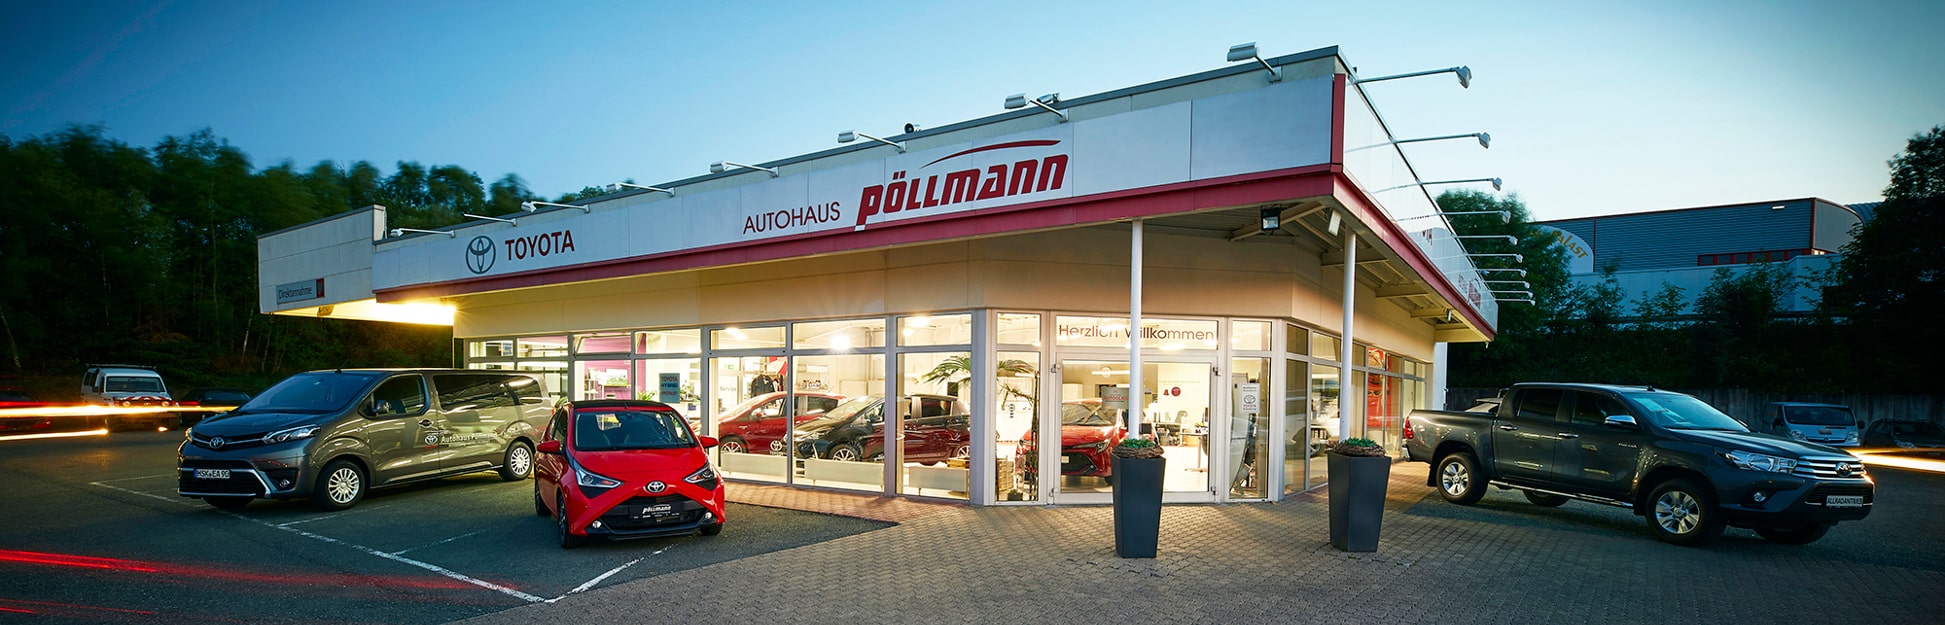 Autohaus Poellmann in Winterberg